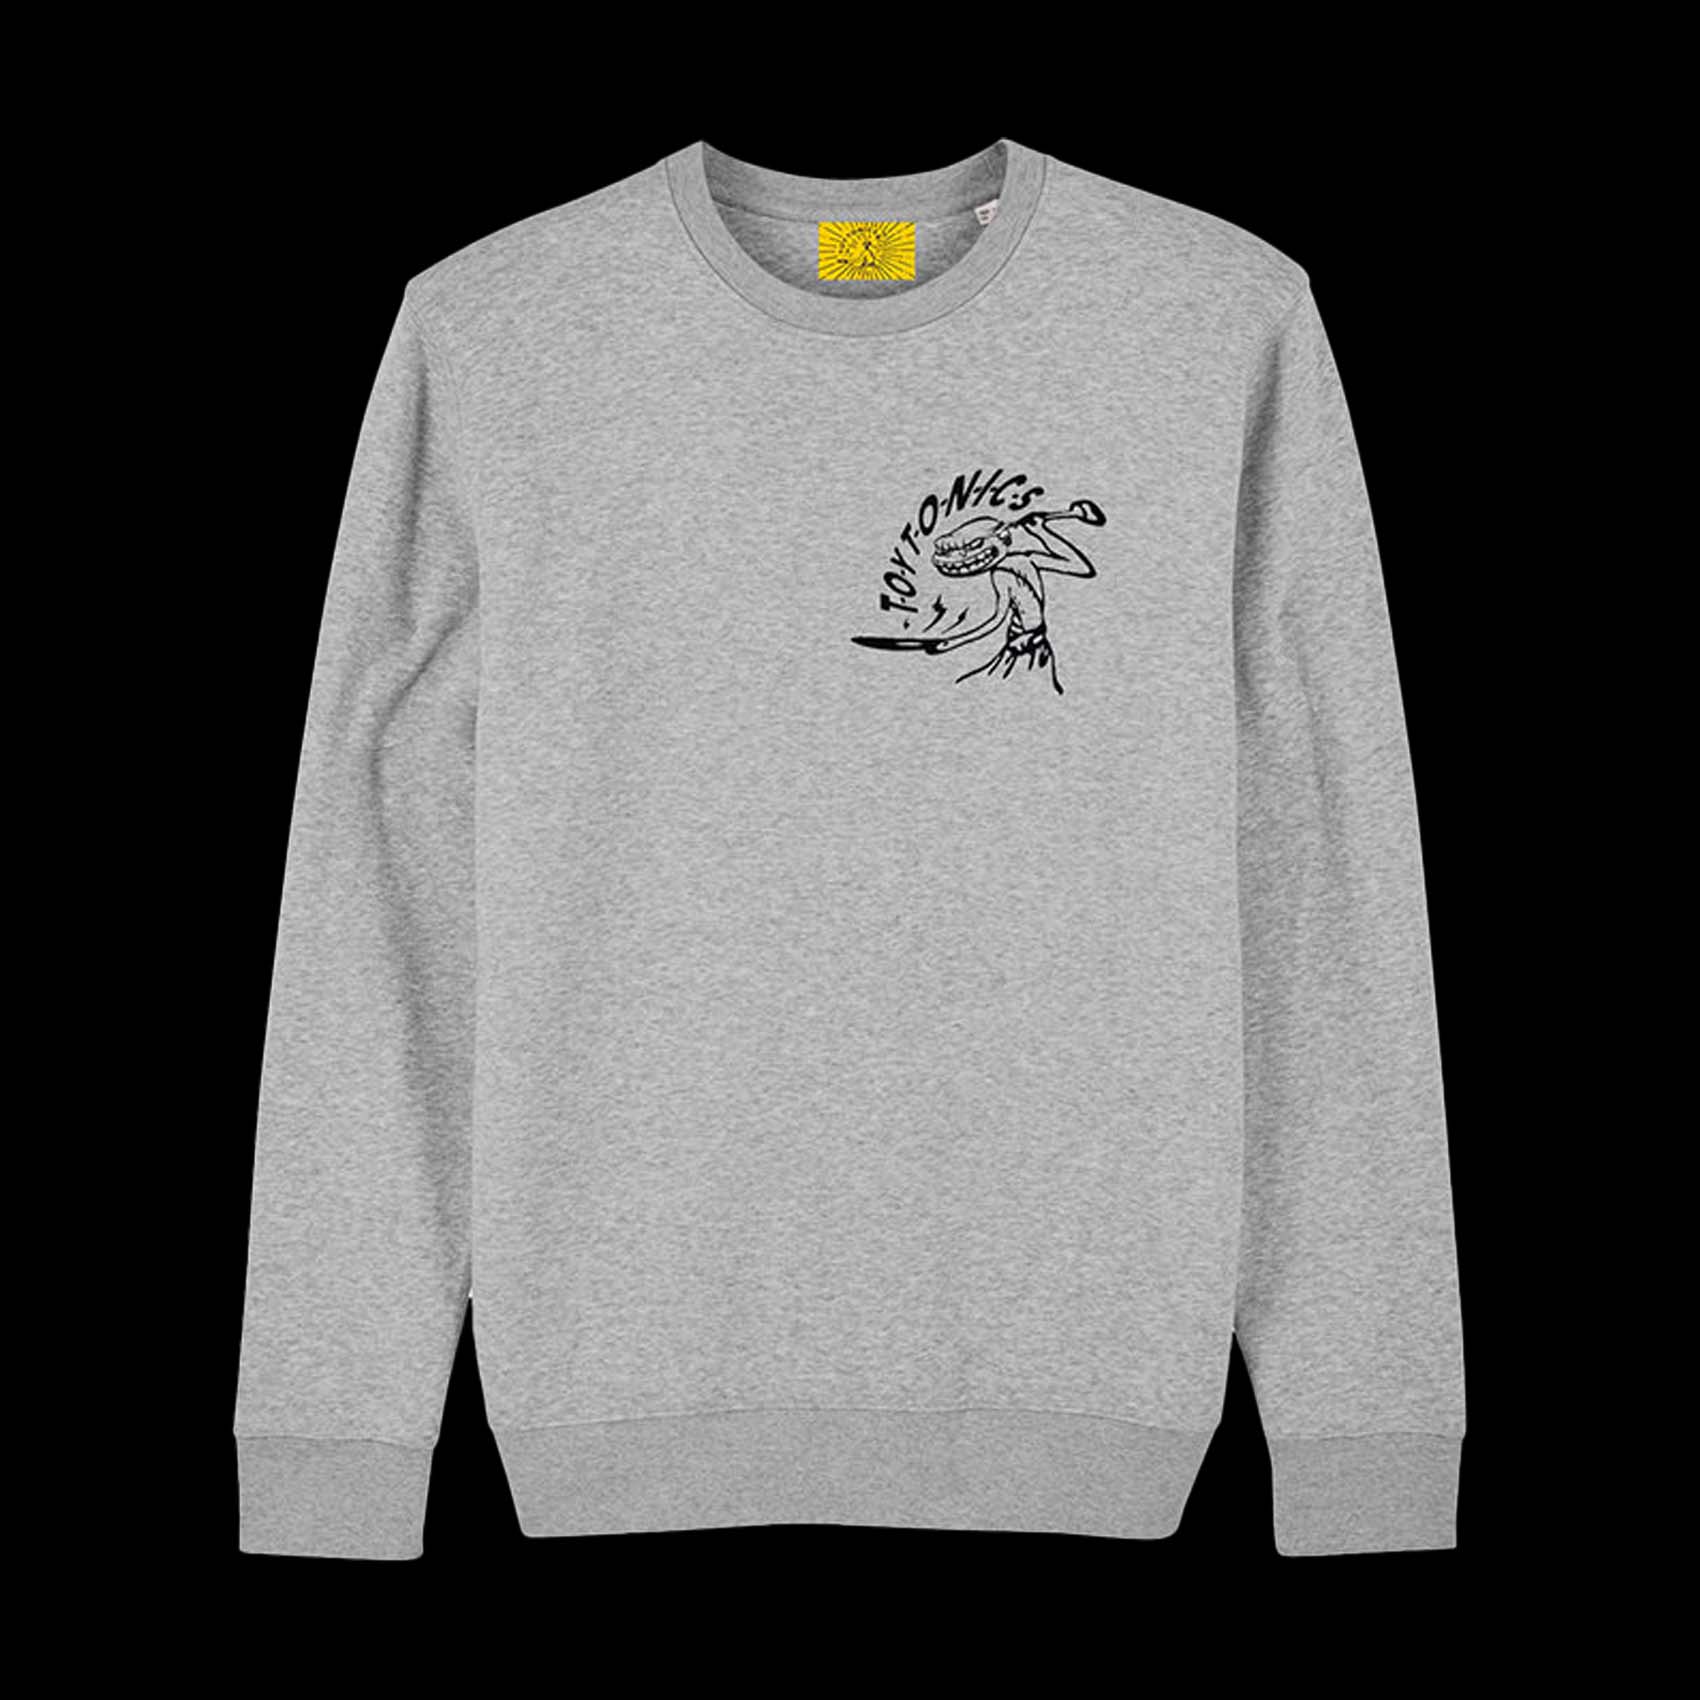 Toy Tonics Meme Sweater – grey